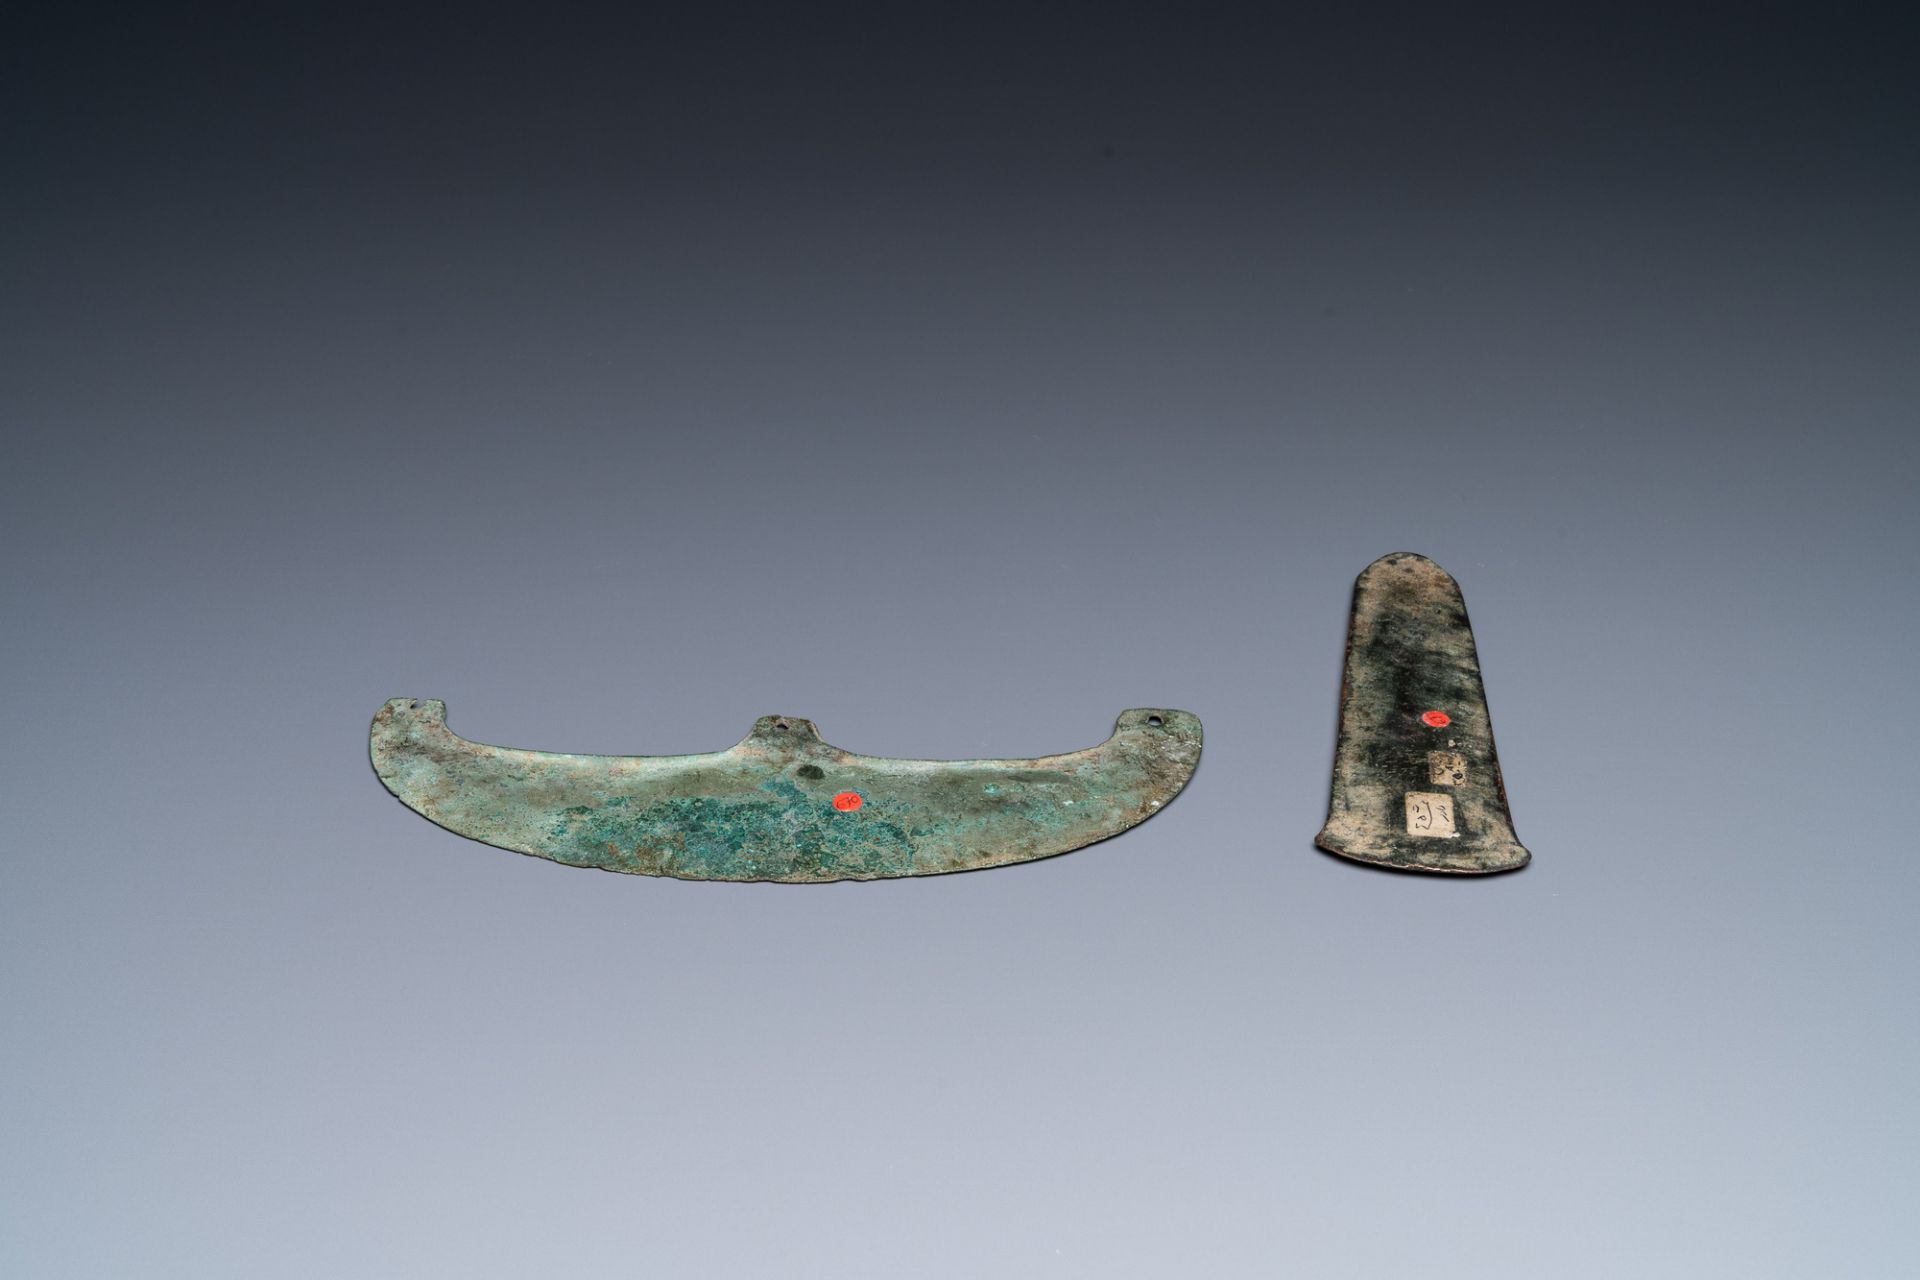 Two Luristan bronze axe heads, Iran, 1st millenium BC - Image 3 of 5